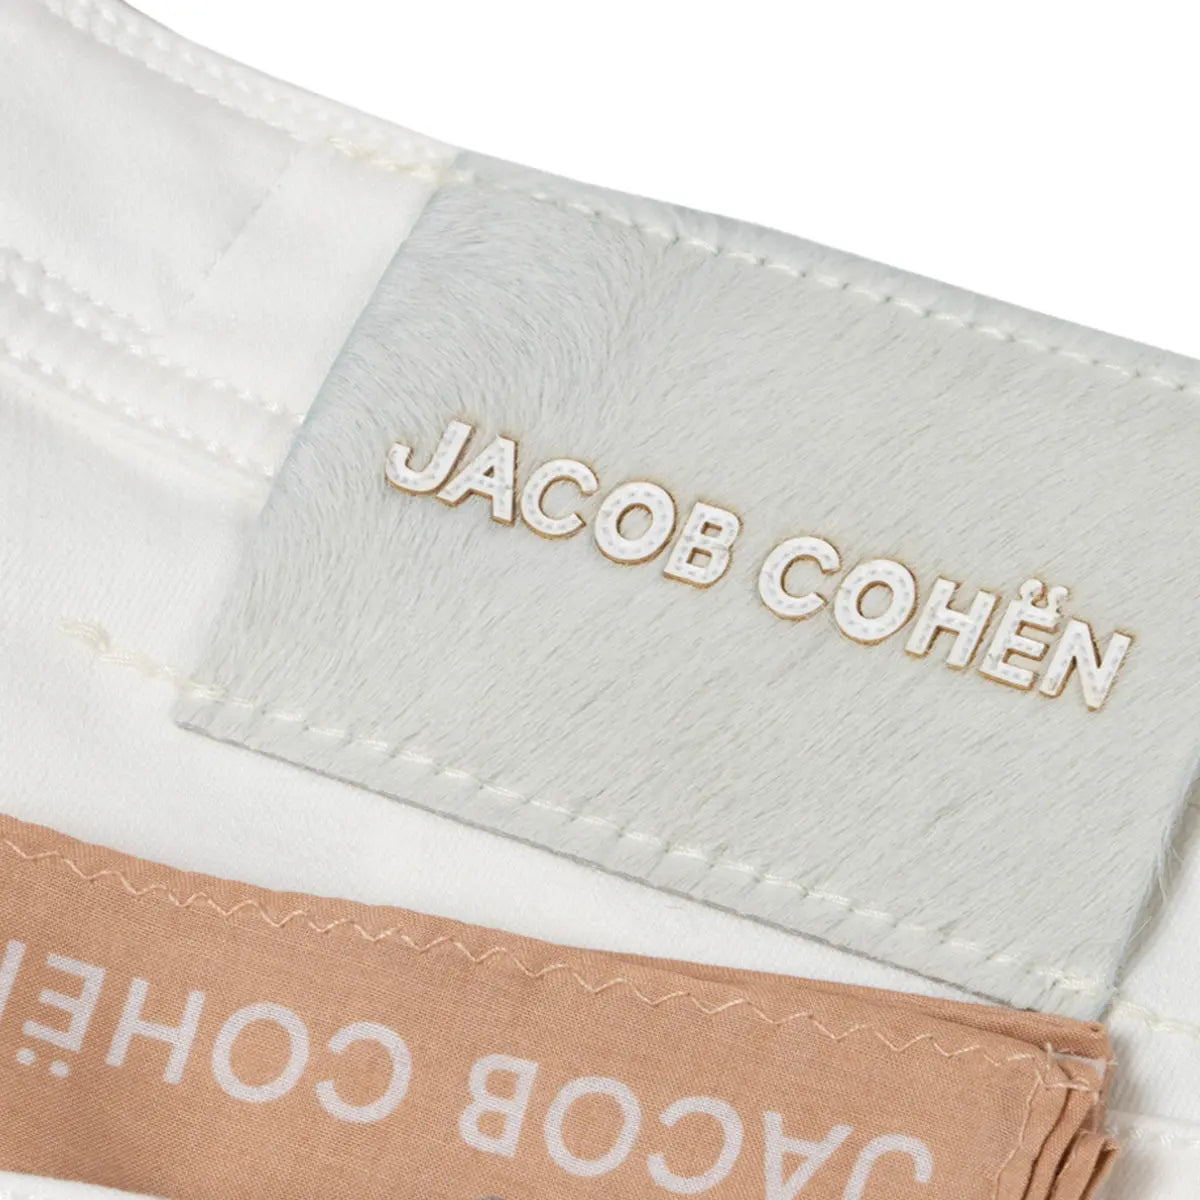 White 'Bard' Stretch Slim Fit Jeans  Jacob Cohen   